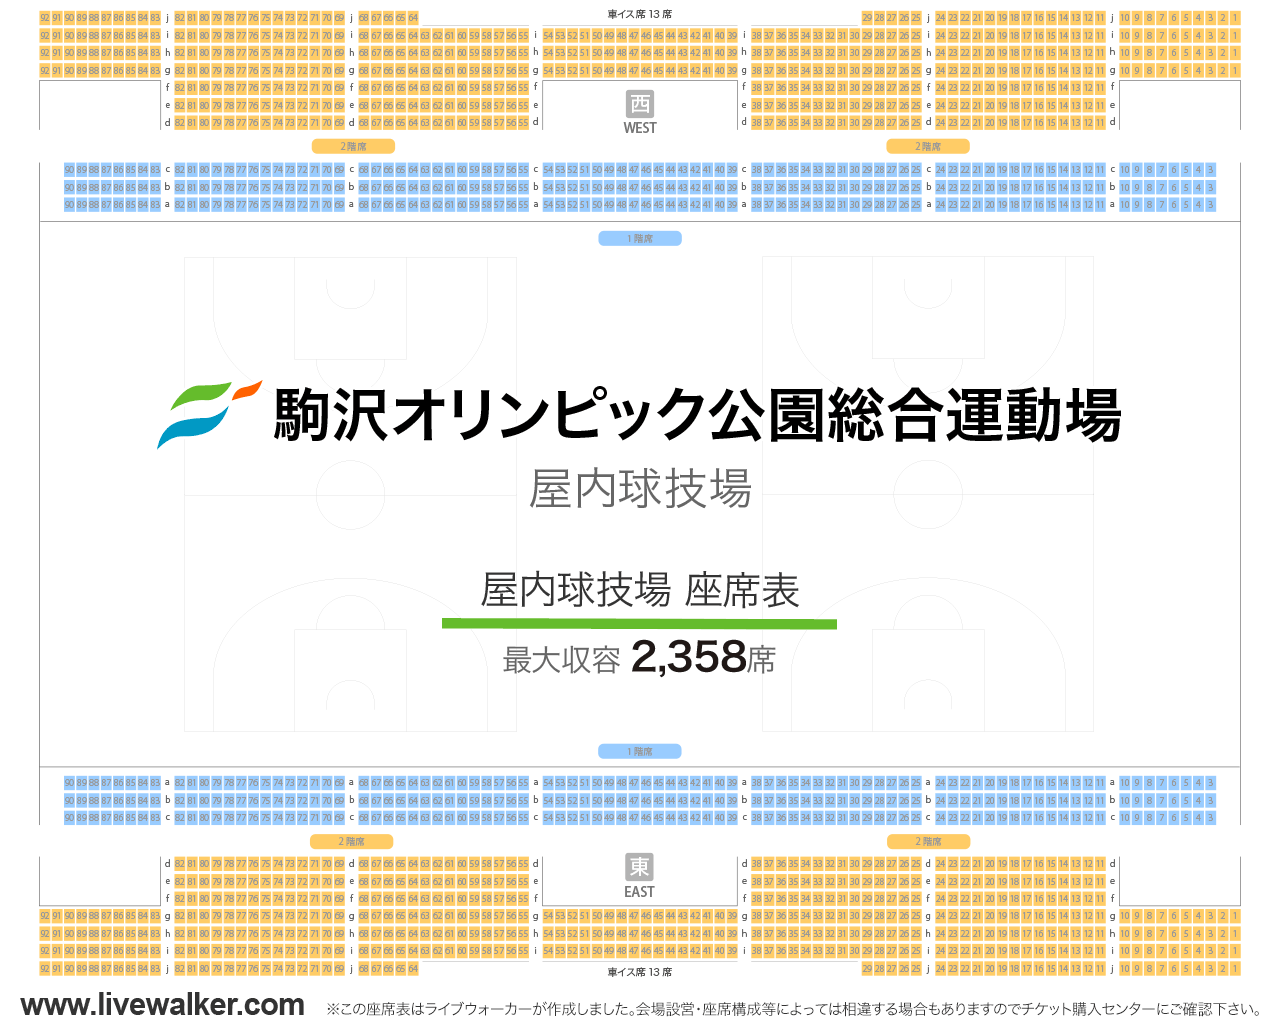 駒沢オリンピック公園 屋内球技場屋内球技場の座席表